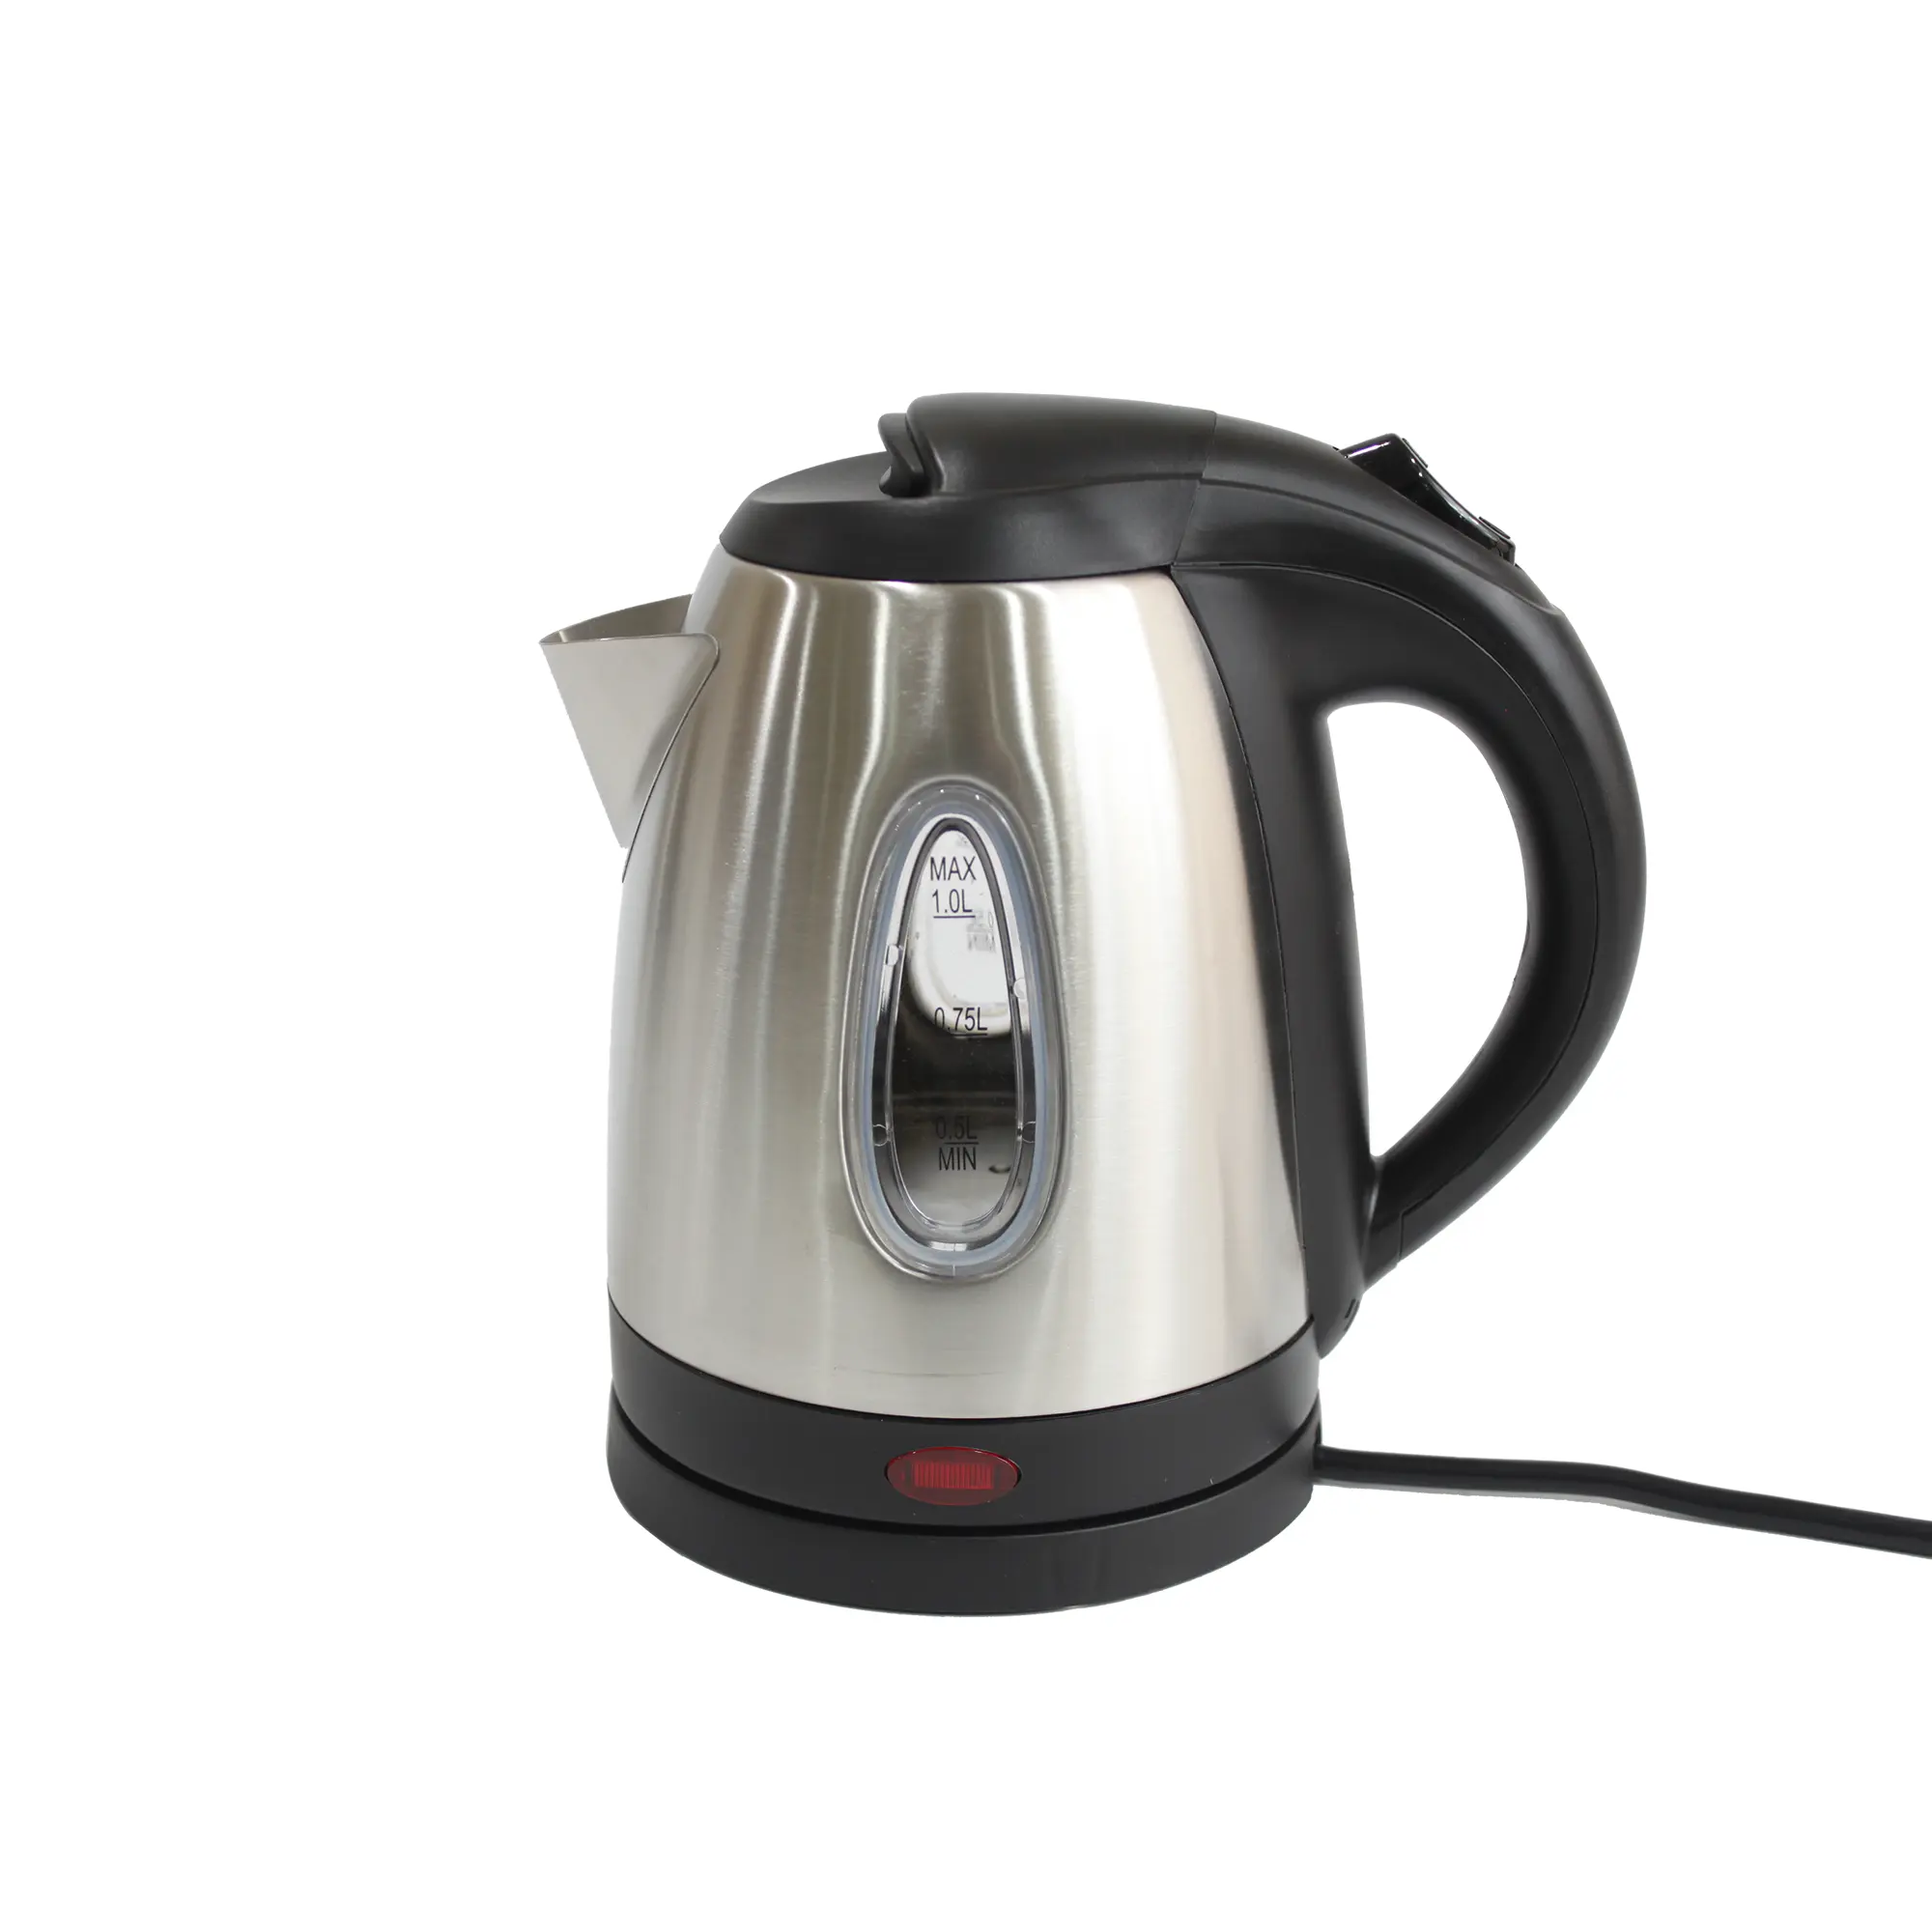 UNI-SEC Travel intelligent Tea kettle thermostat mini portable electronic water kettle electric tea Parts (USK-0908)